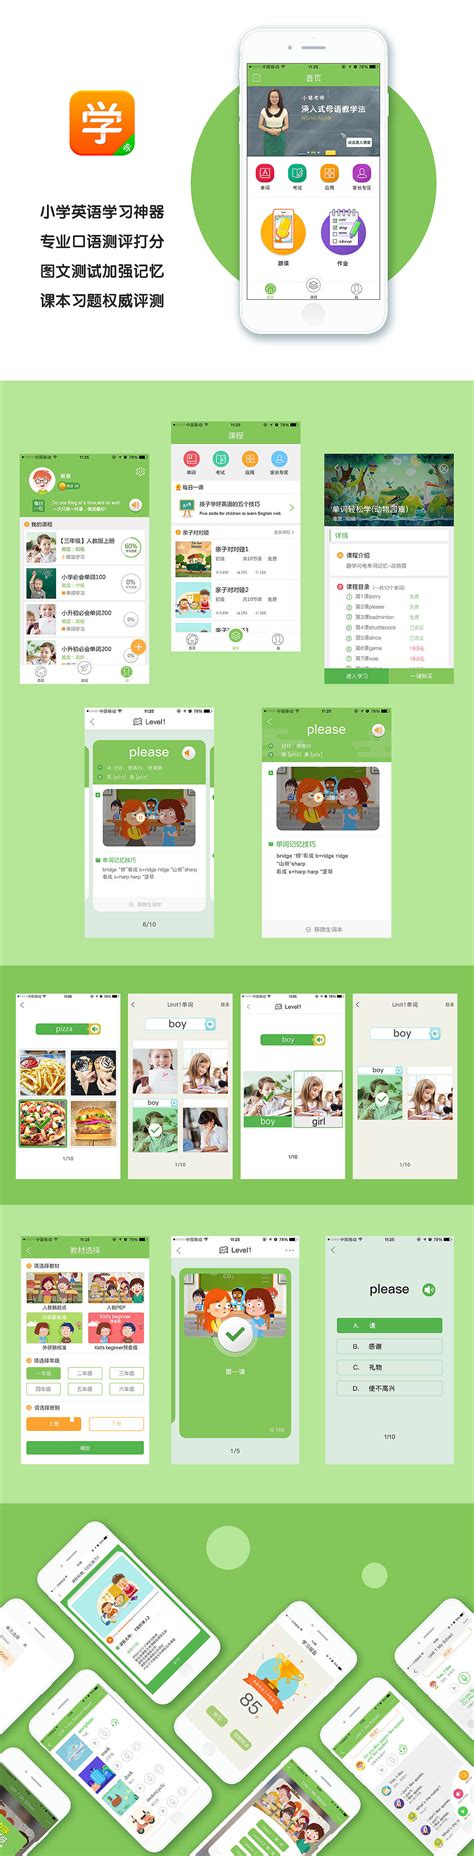 UI设计绿色图书阅读app首页主界面模板素材-正版图片401348240-摄图网